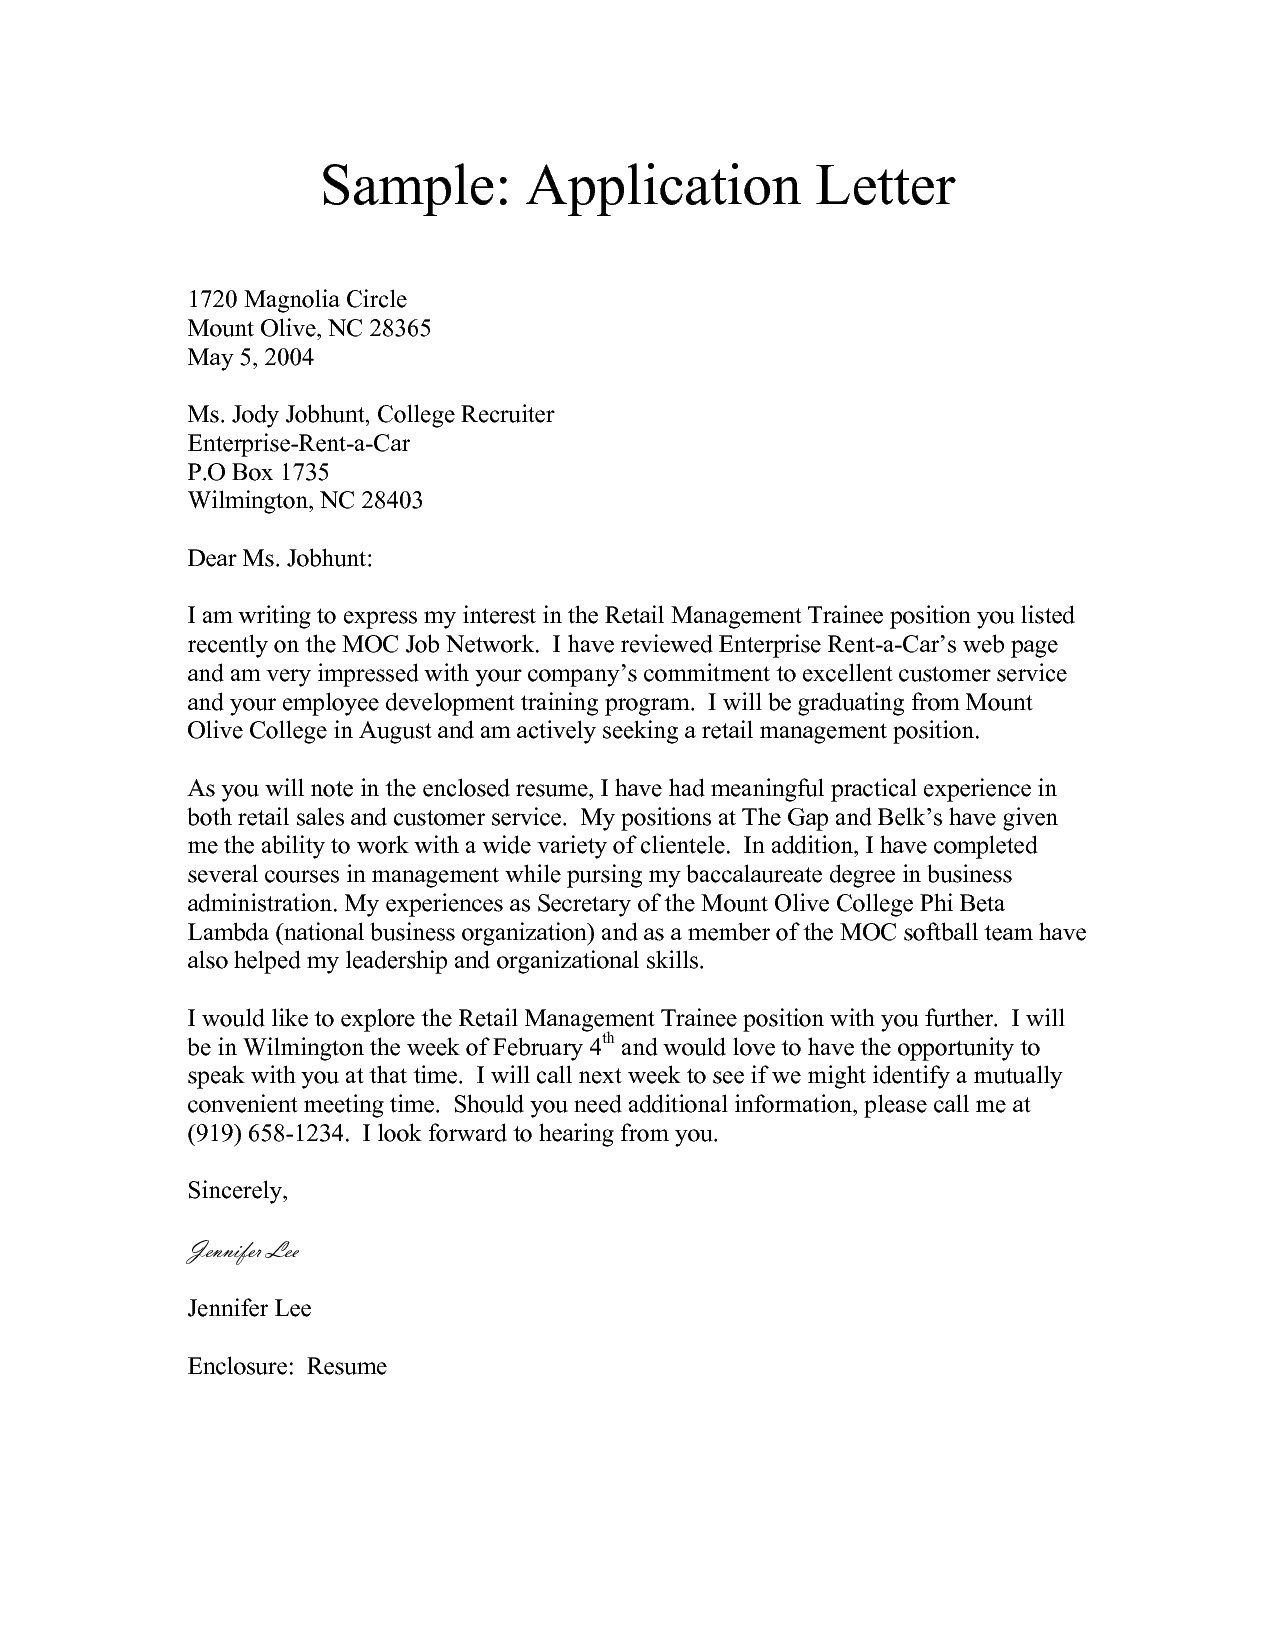 Letter Of Application Template 7 Application Letter Samples Sample Letters Word